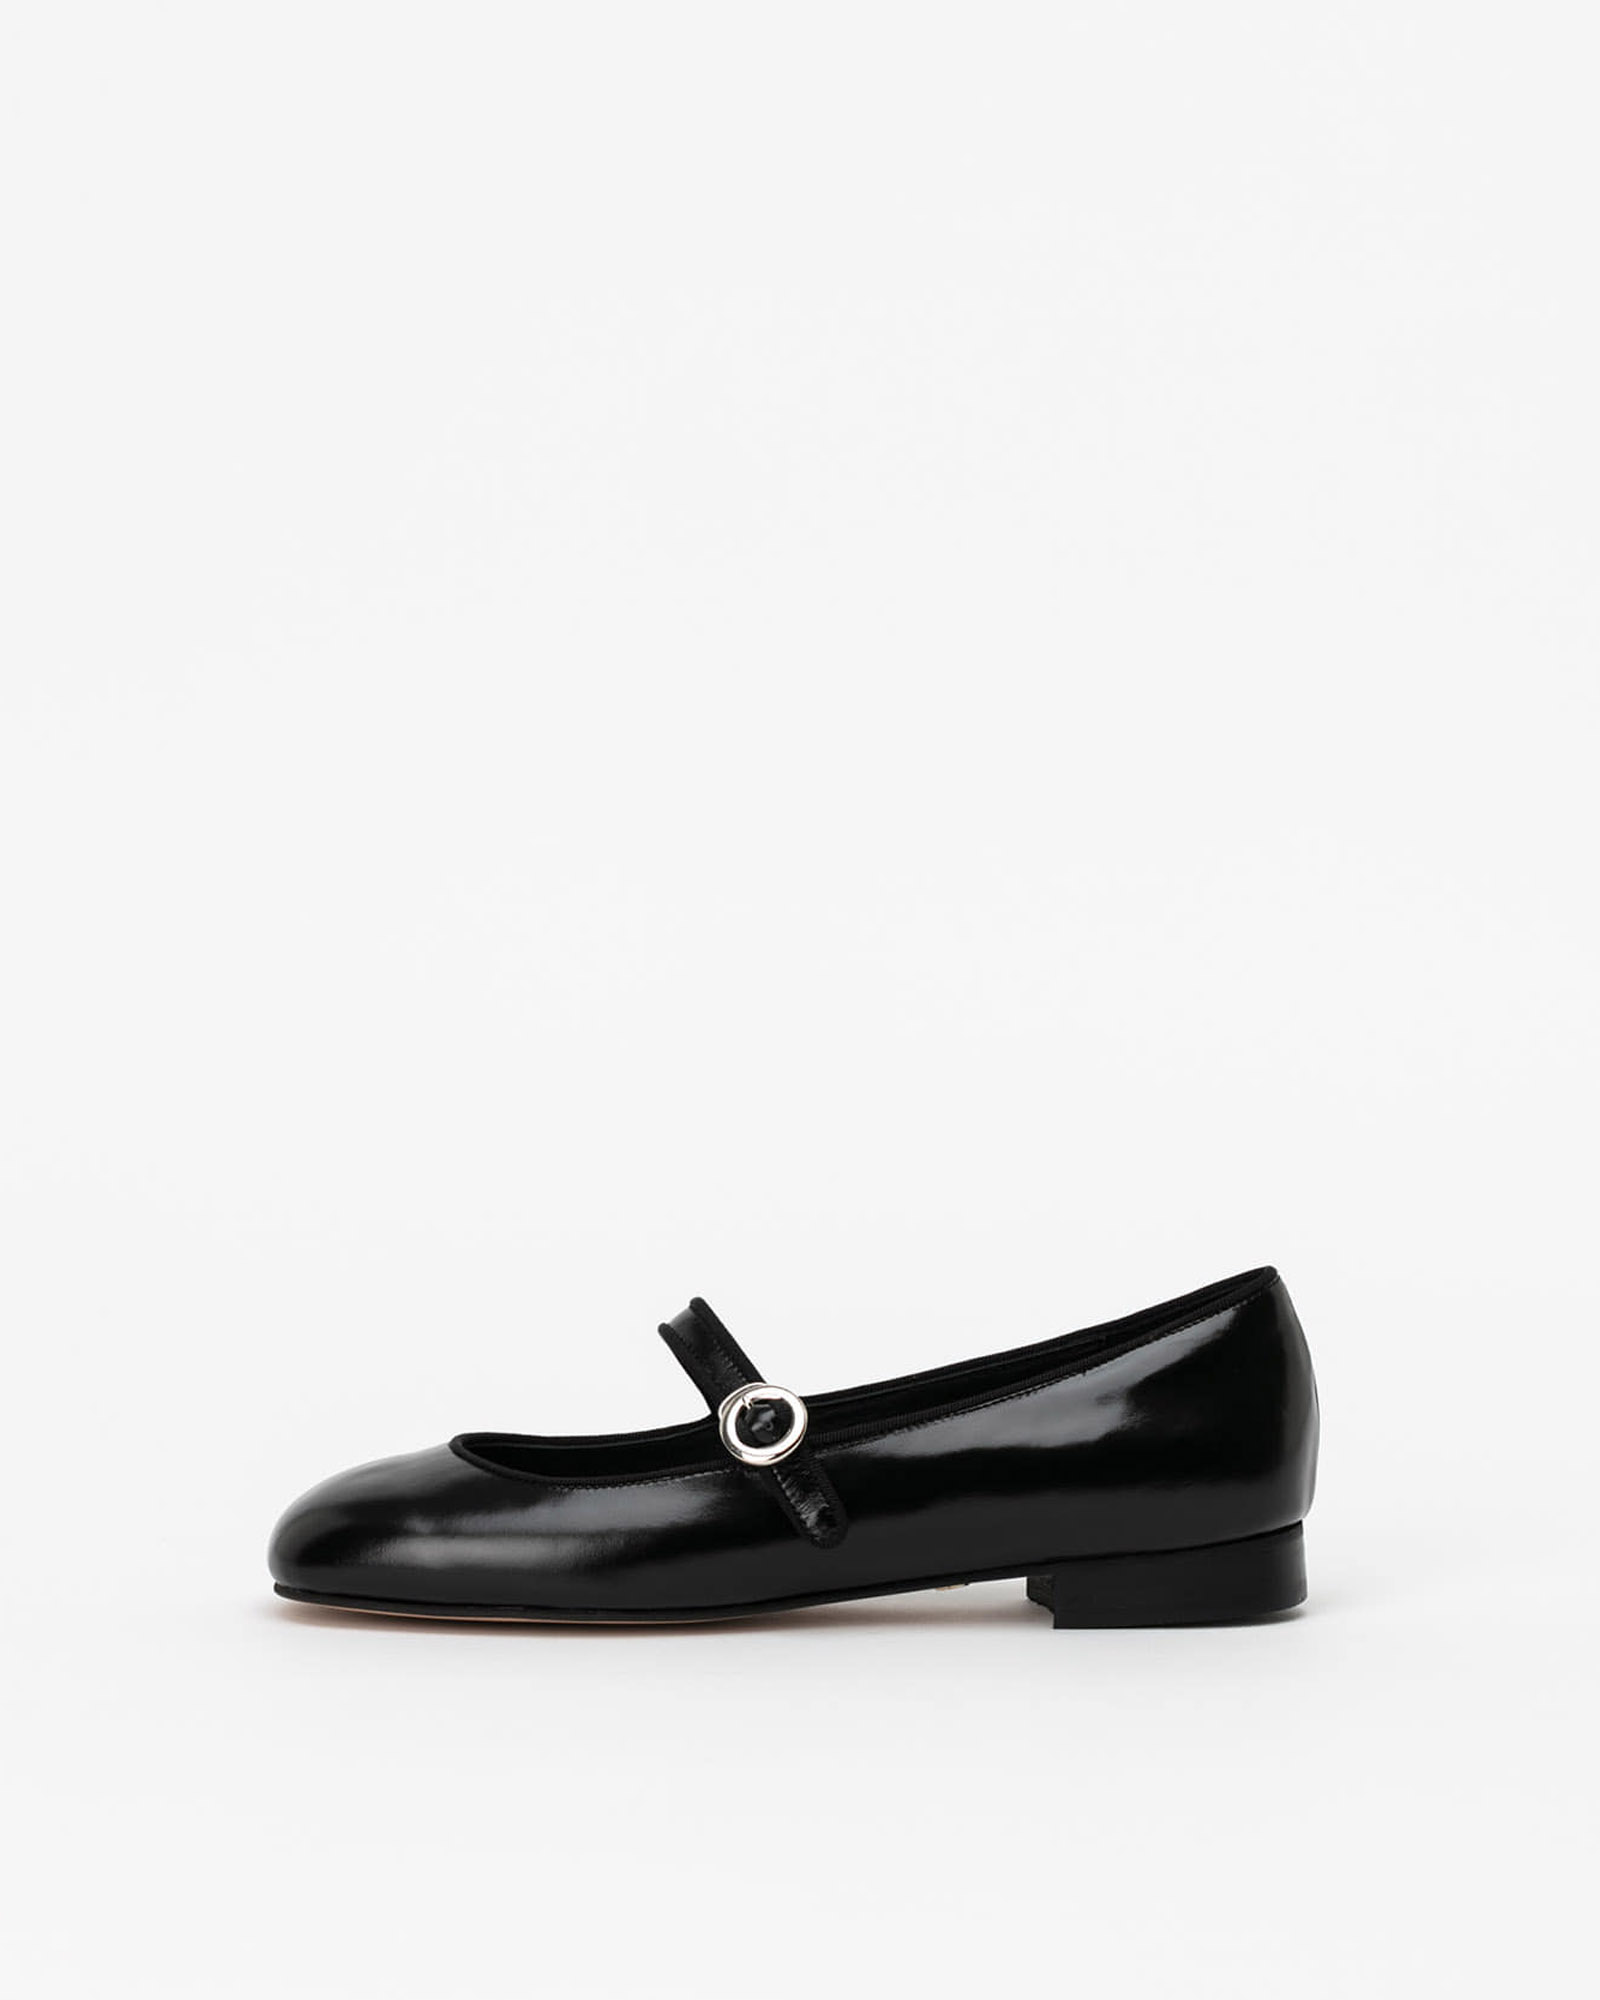 Aspen Maryjane Flat Shoes in Textured Black